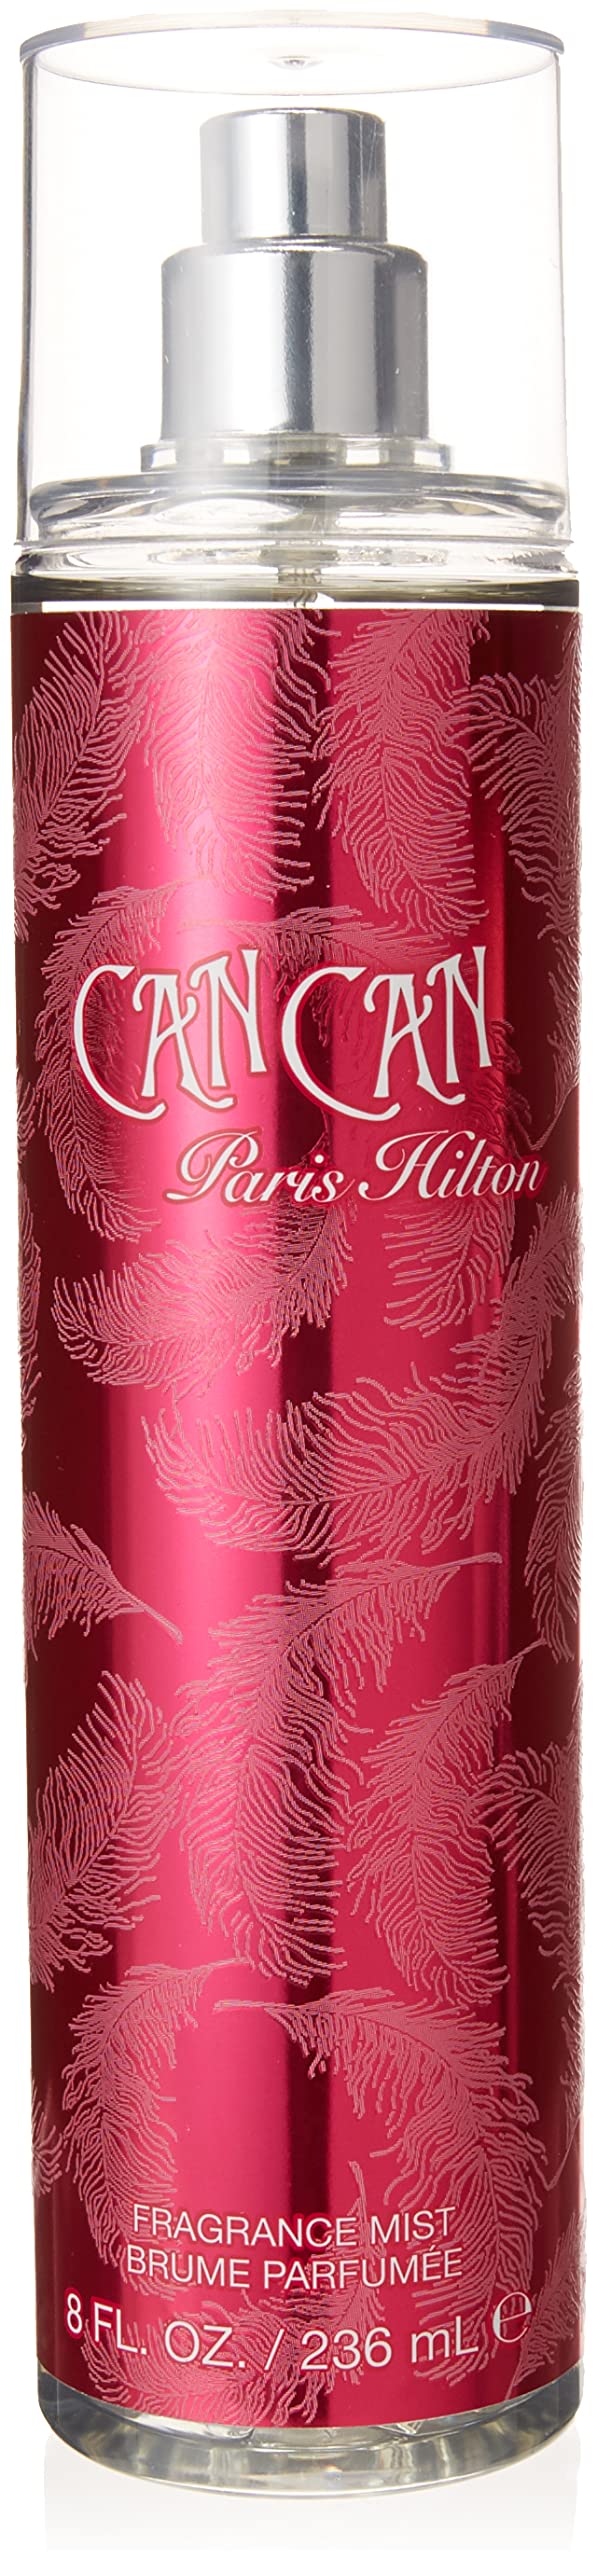 Can Can by Paris Hilton - Body Mist 8oz